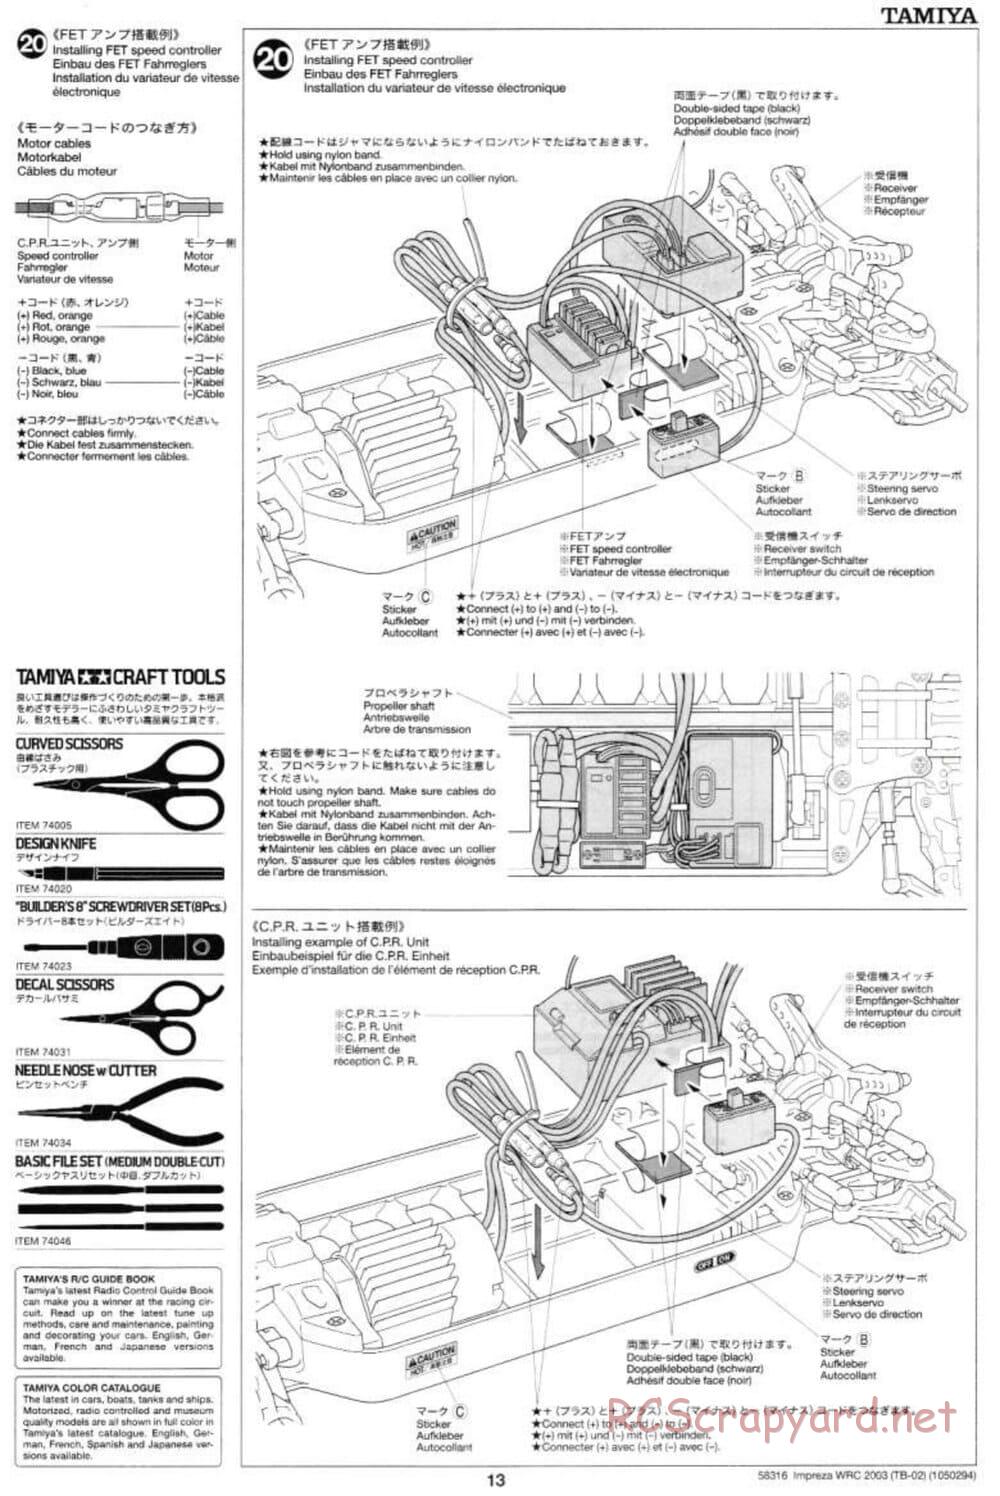 Tamiya - Subaru Impreza WRC 2003 - TB-02 Chassis - Manual - Page 13